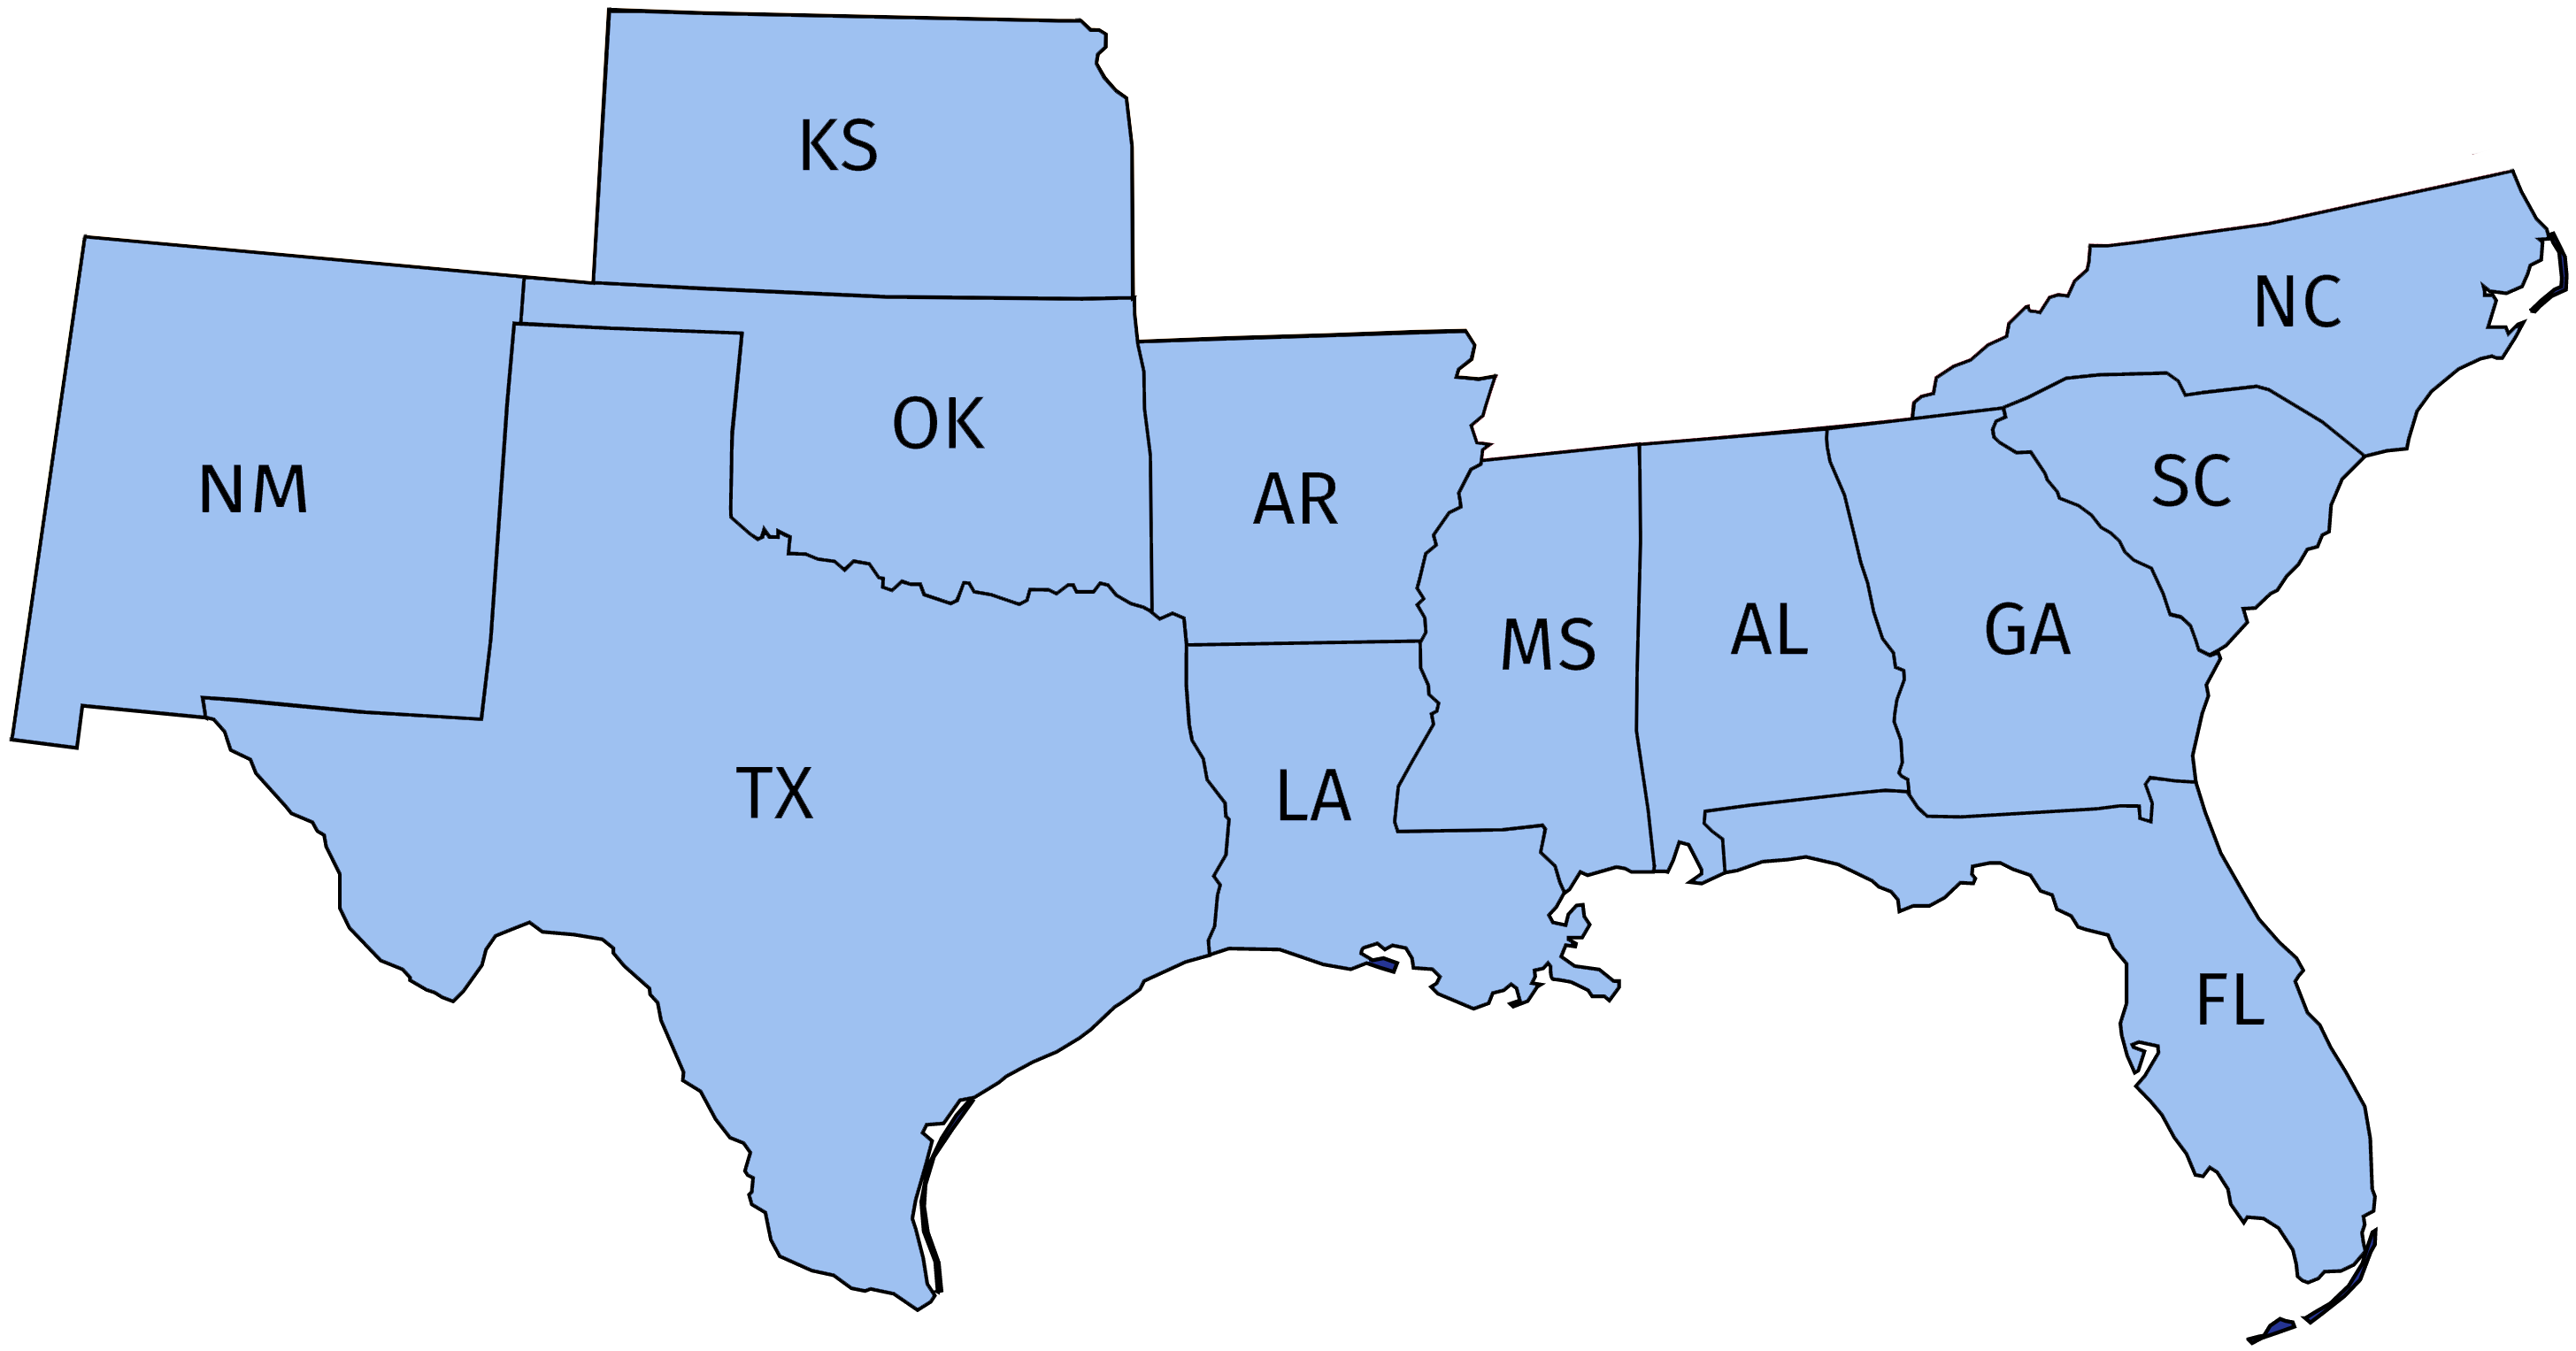 Southern Division map of KS, NM, TX, OK, AR, LA, MS, AL, GA, FL, SC, NC